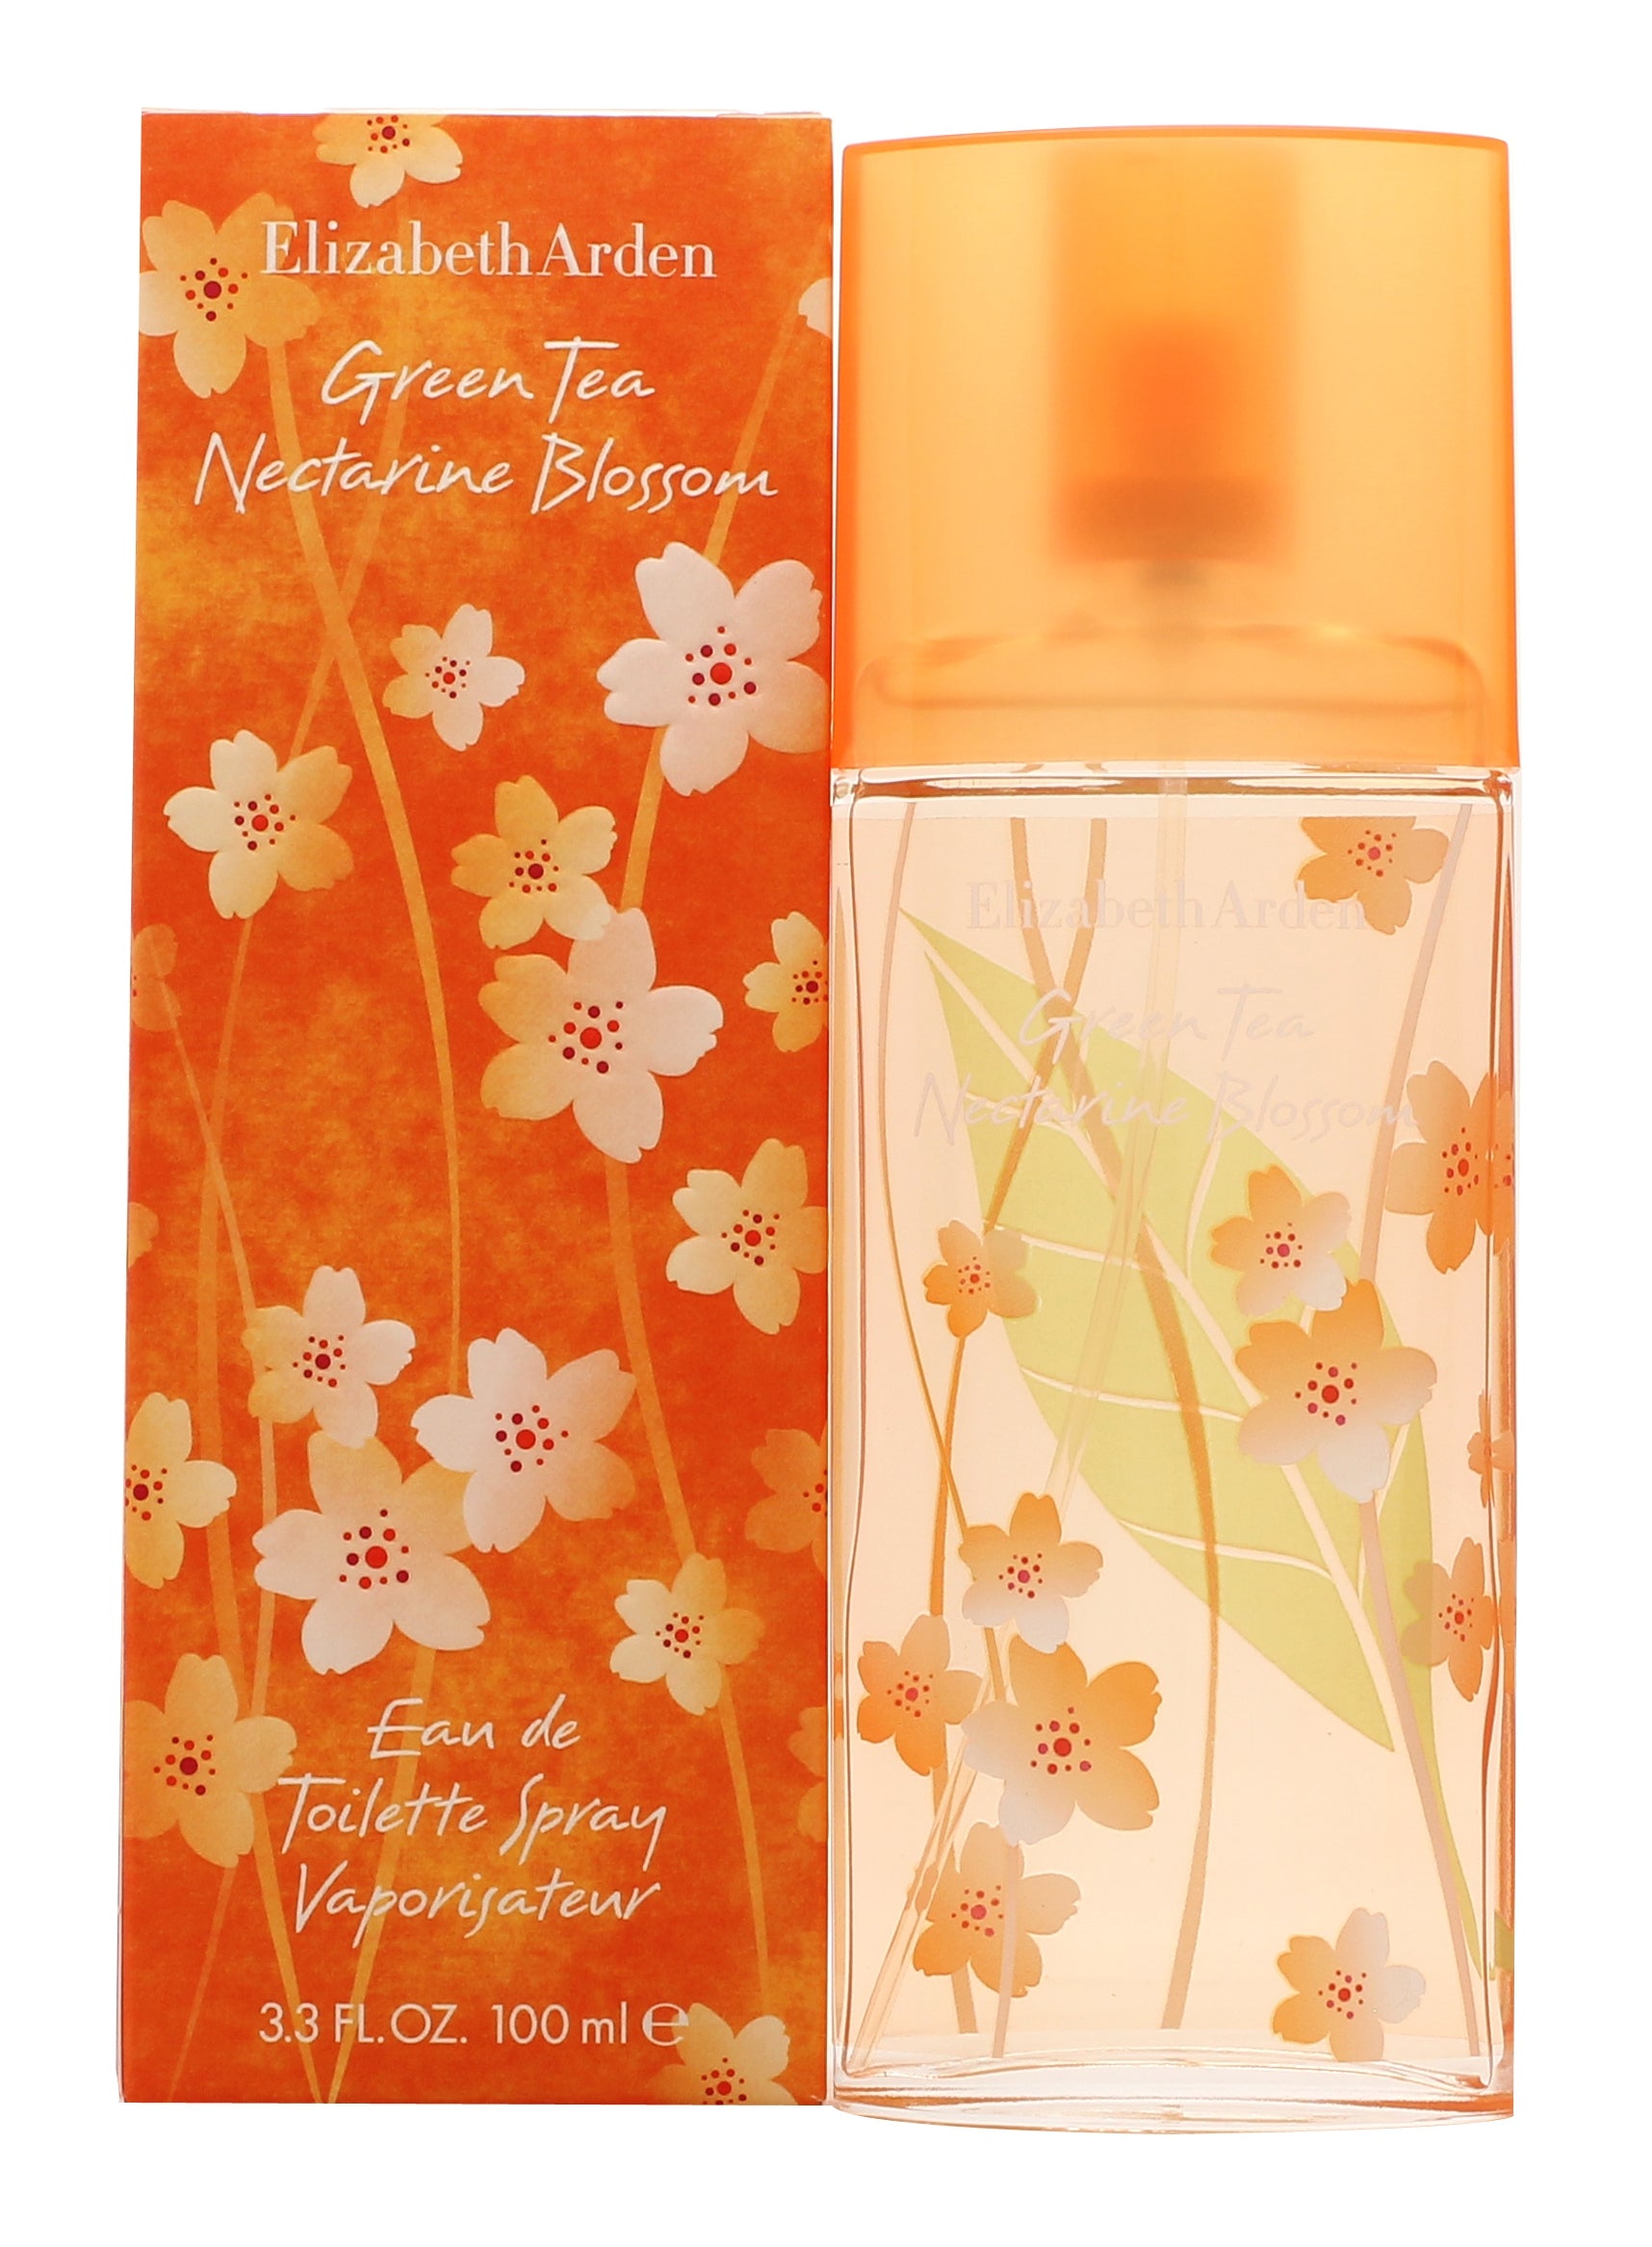 View Elizabeth Arden Green Tea Nectarine Blossom Eau de Toilette 100ml Spray information